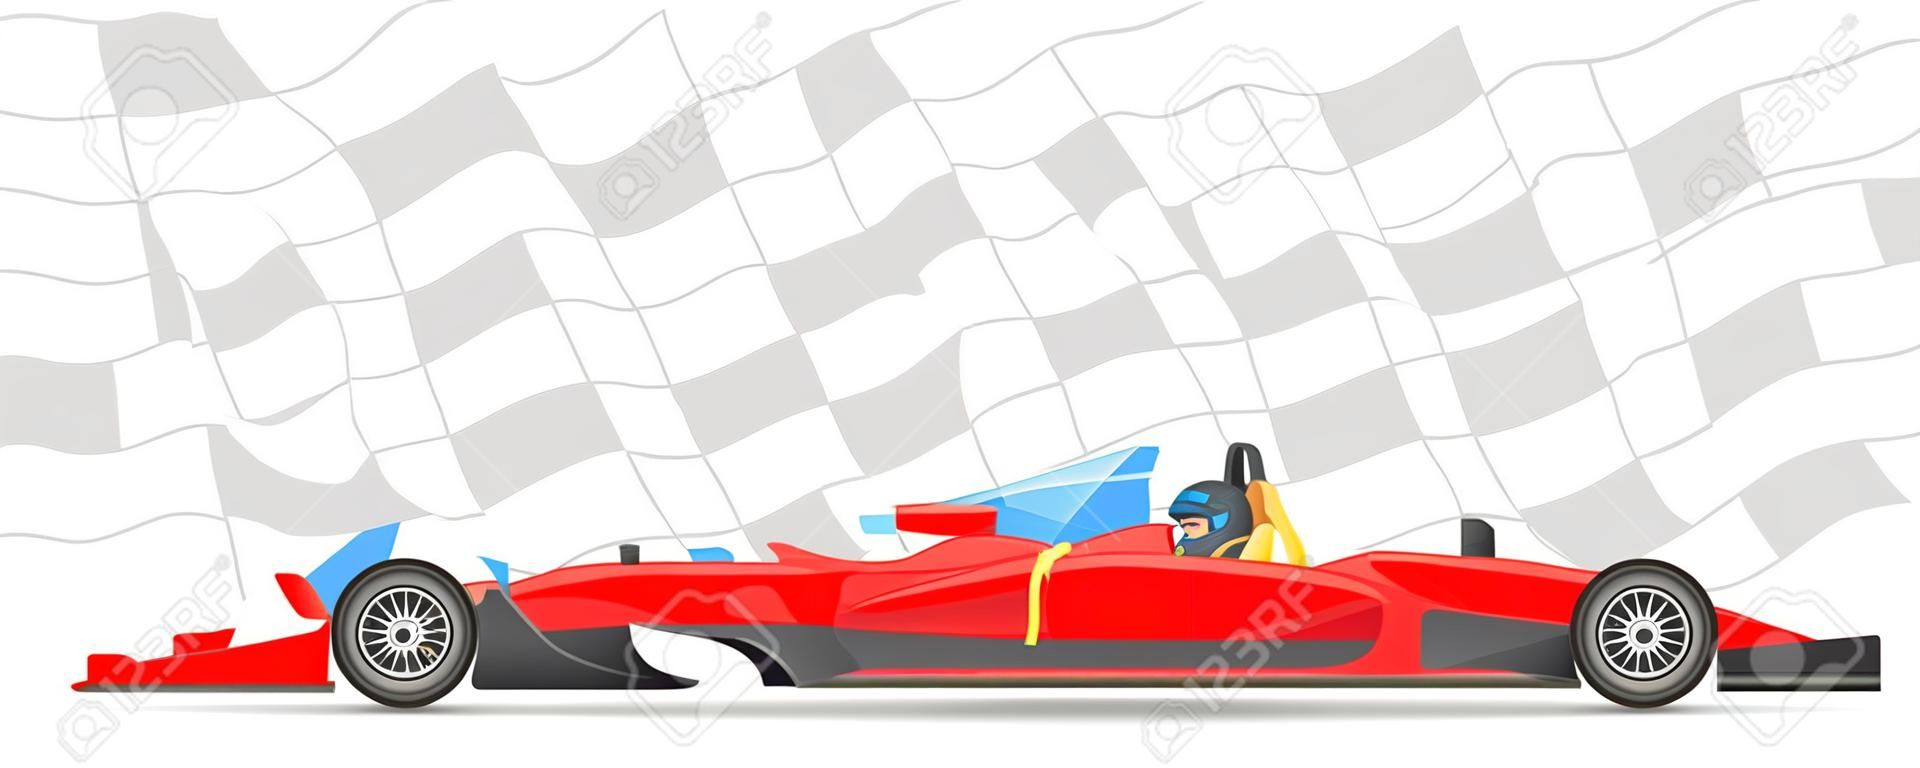 Rode race auto zijaanzicht op sport finish vlag achtergrond. Vector illustratie.